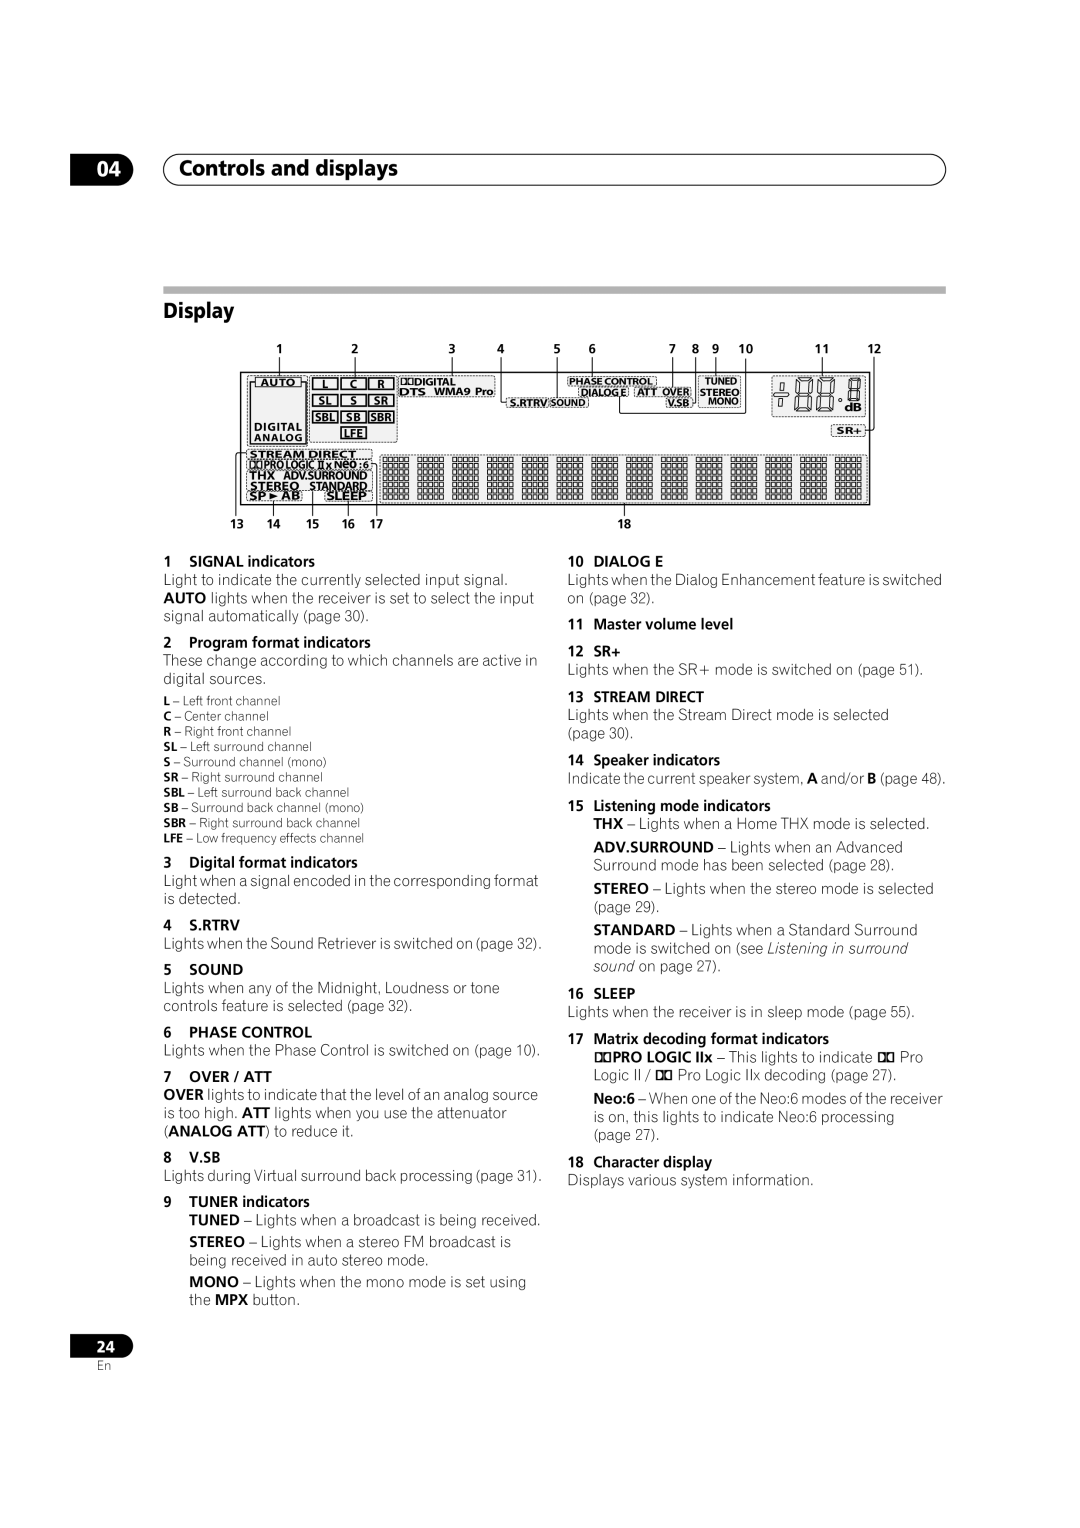 Pioneer VSX1017TXV manual 04Controls and displays, Display 